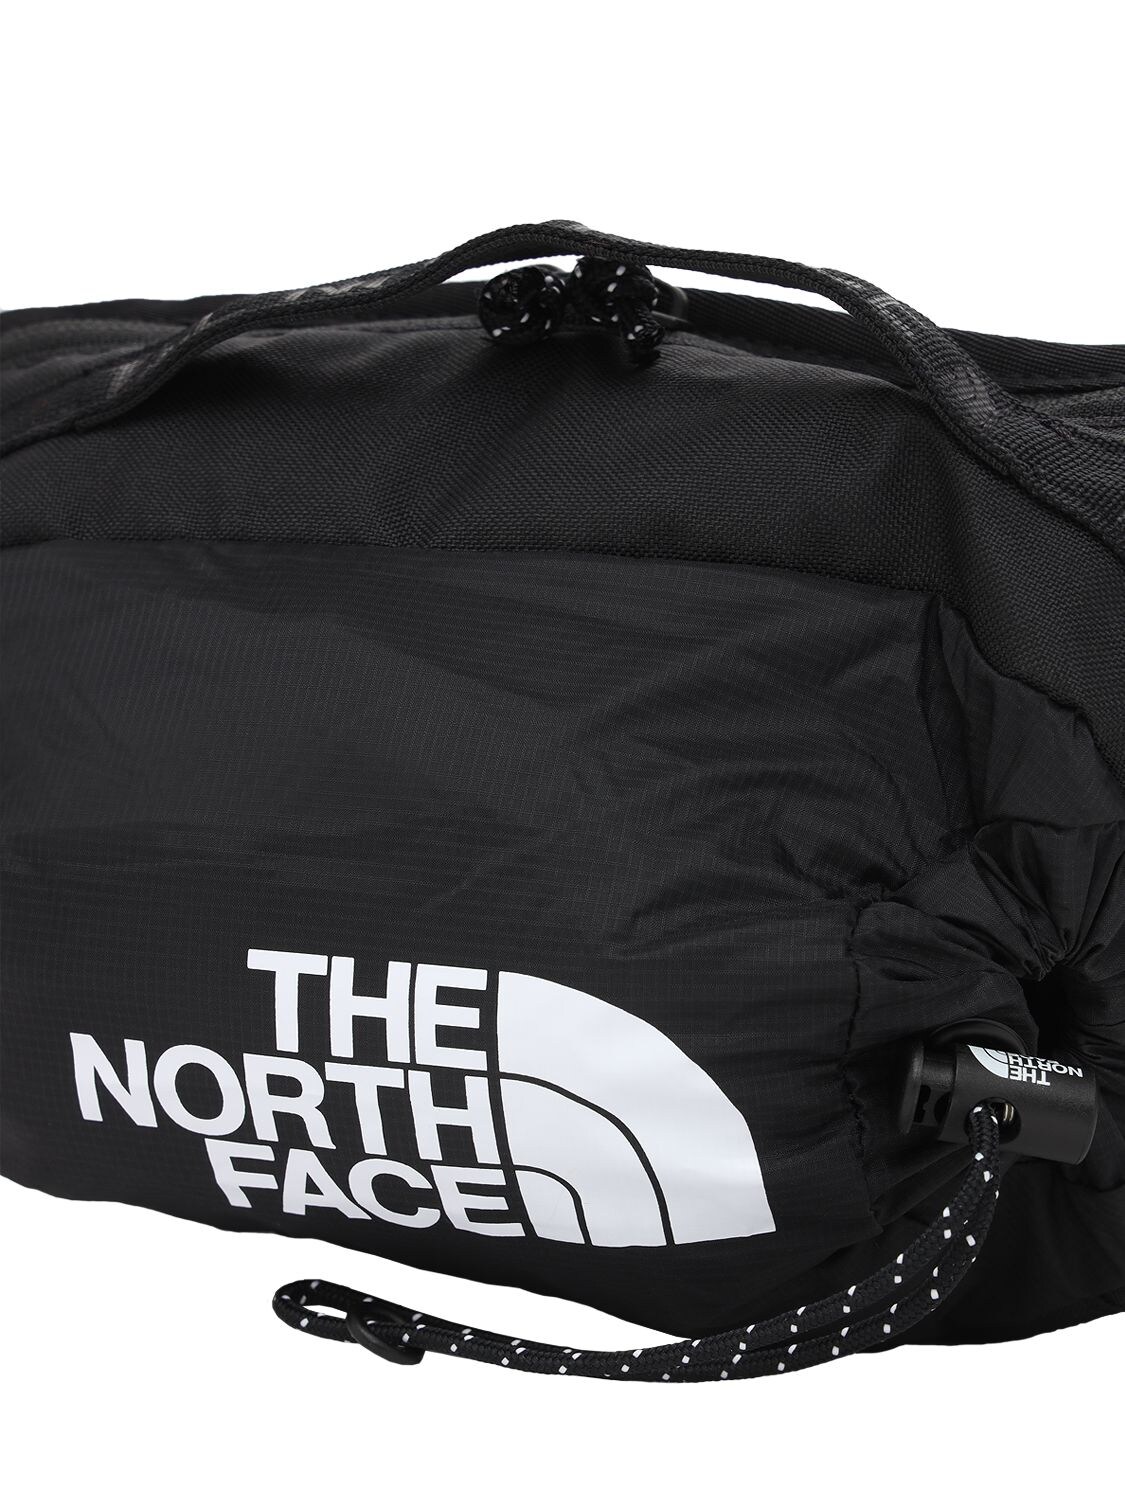 THE NORTH FACE Bags 3L BOZER BELT BAG